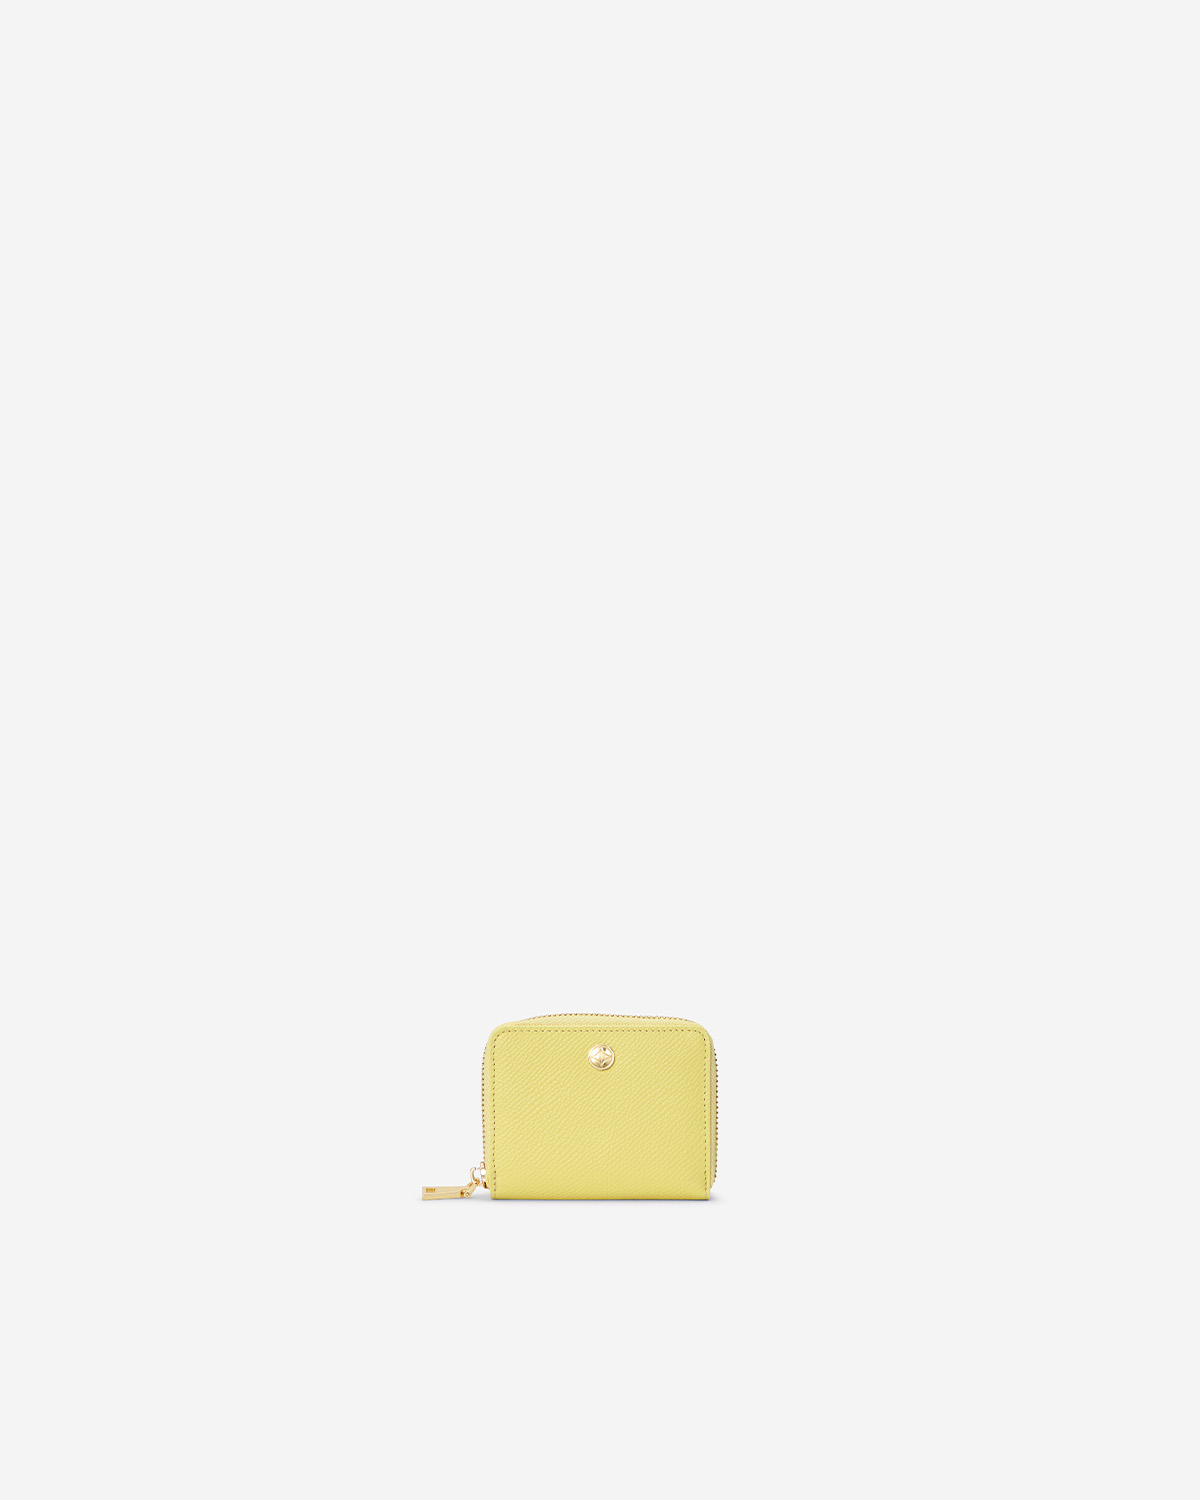 VERA Emily Zipped Wallet in Happy Yellow กระเป๋าใส่บัตรหนังแท้ ทรงยาว พร้อมช่องซิบ สีส้ม